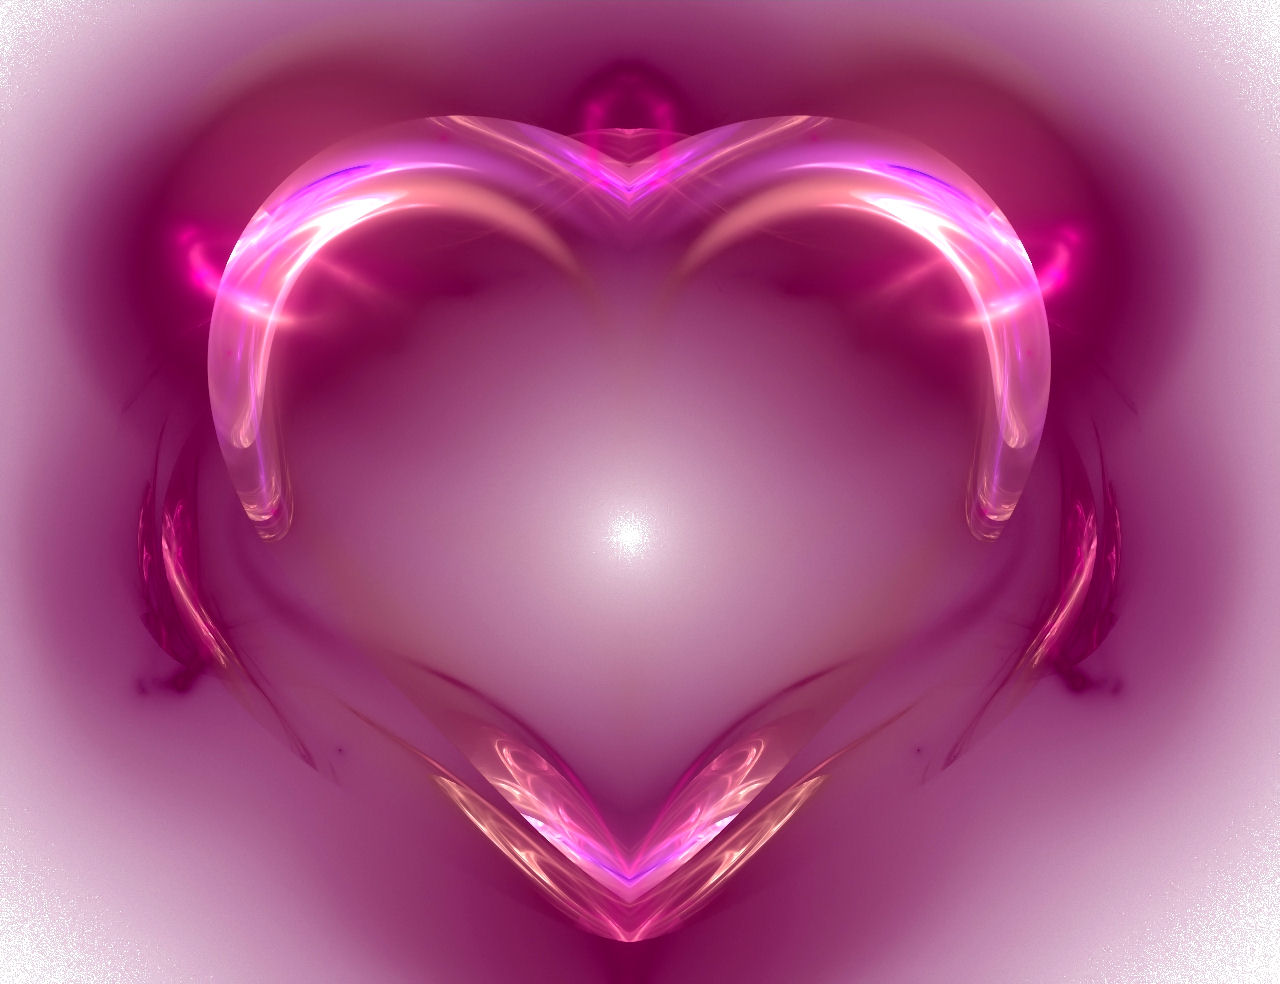 Pink Heart Wallpaper 11102 Hd Wallpapers in Love   Imagescicom